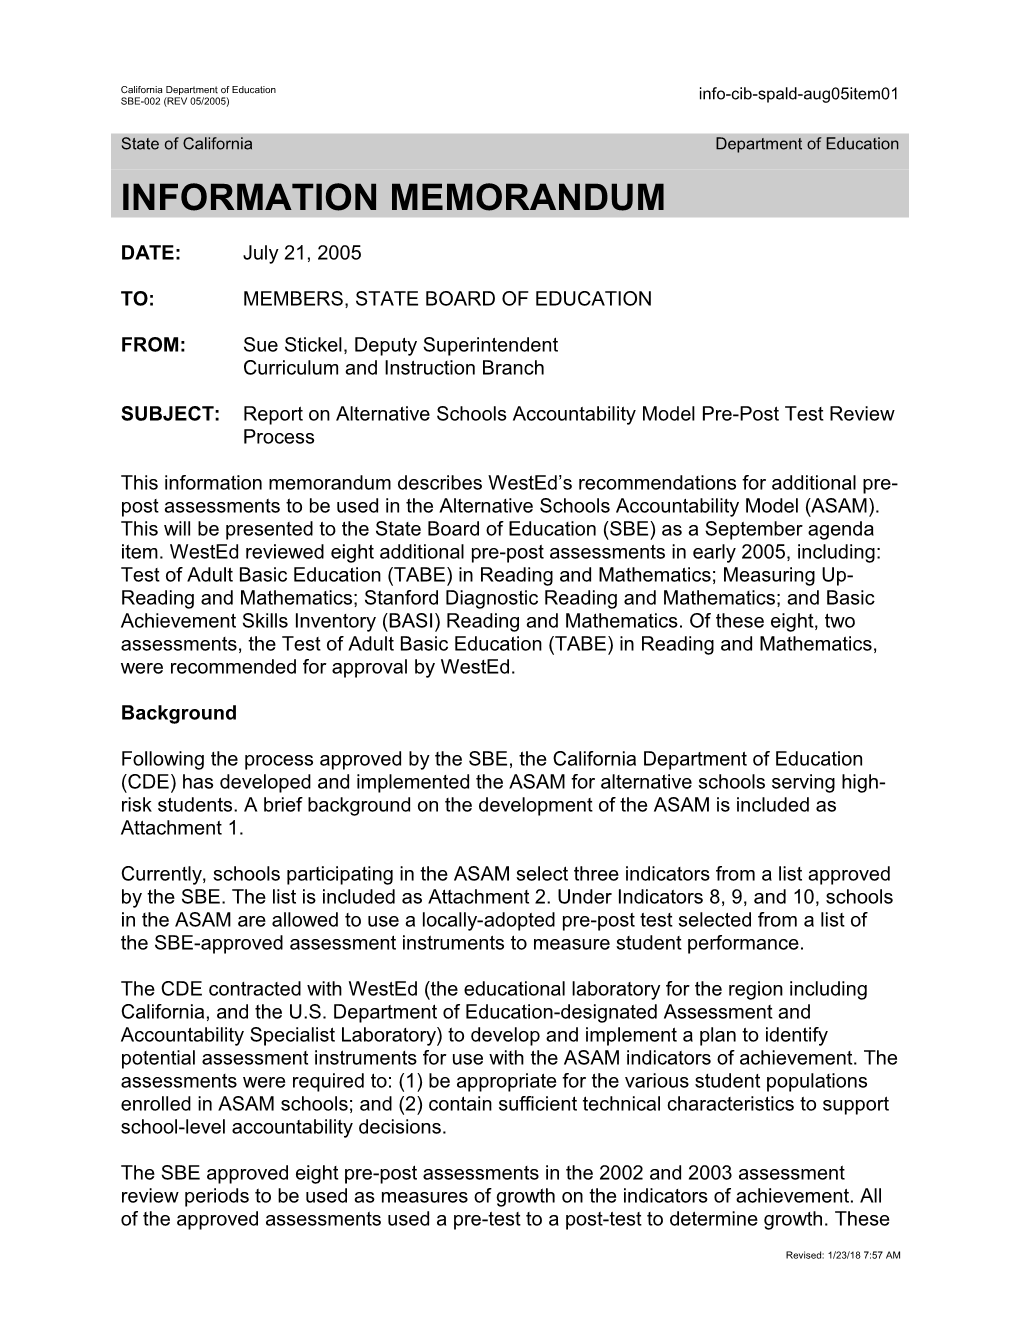 August 2005 Agenda Item 01 - Information Memorandum (CA State Board of Education)